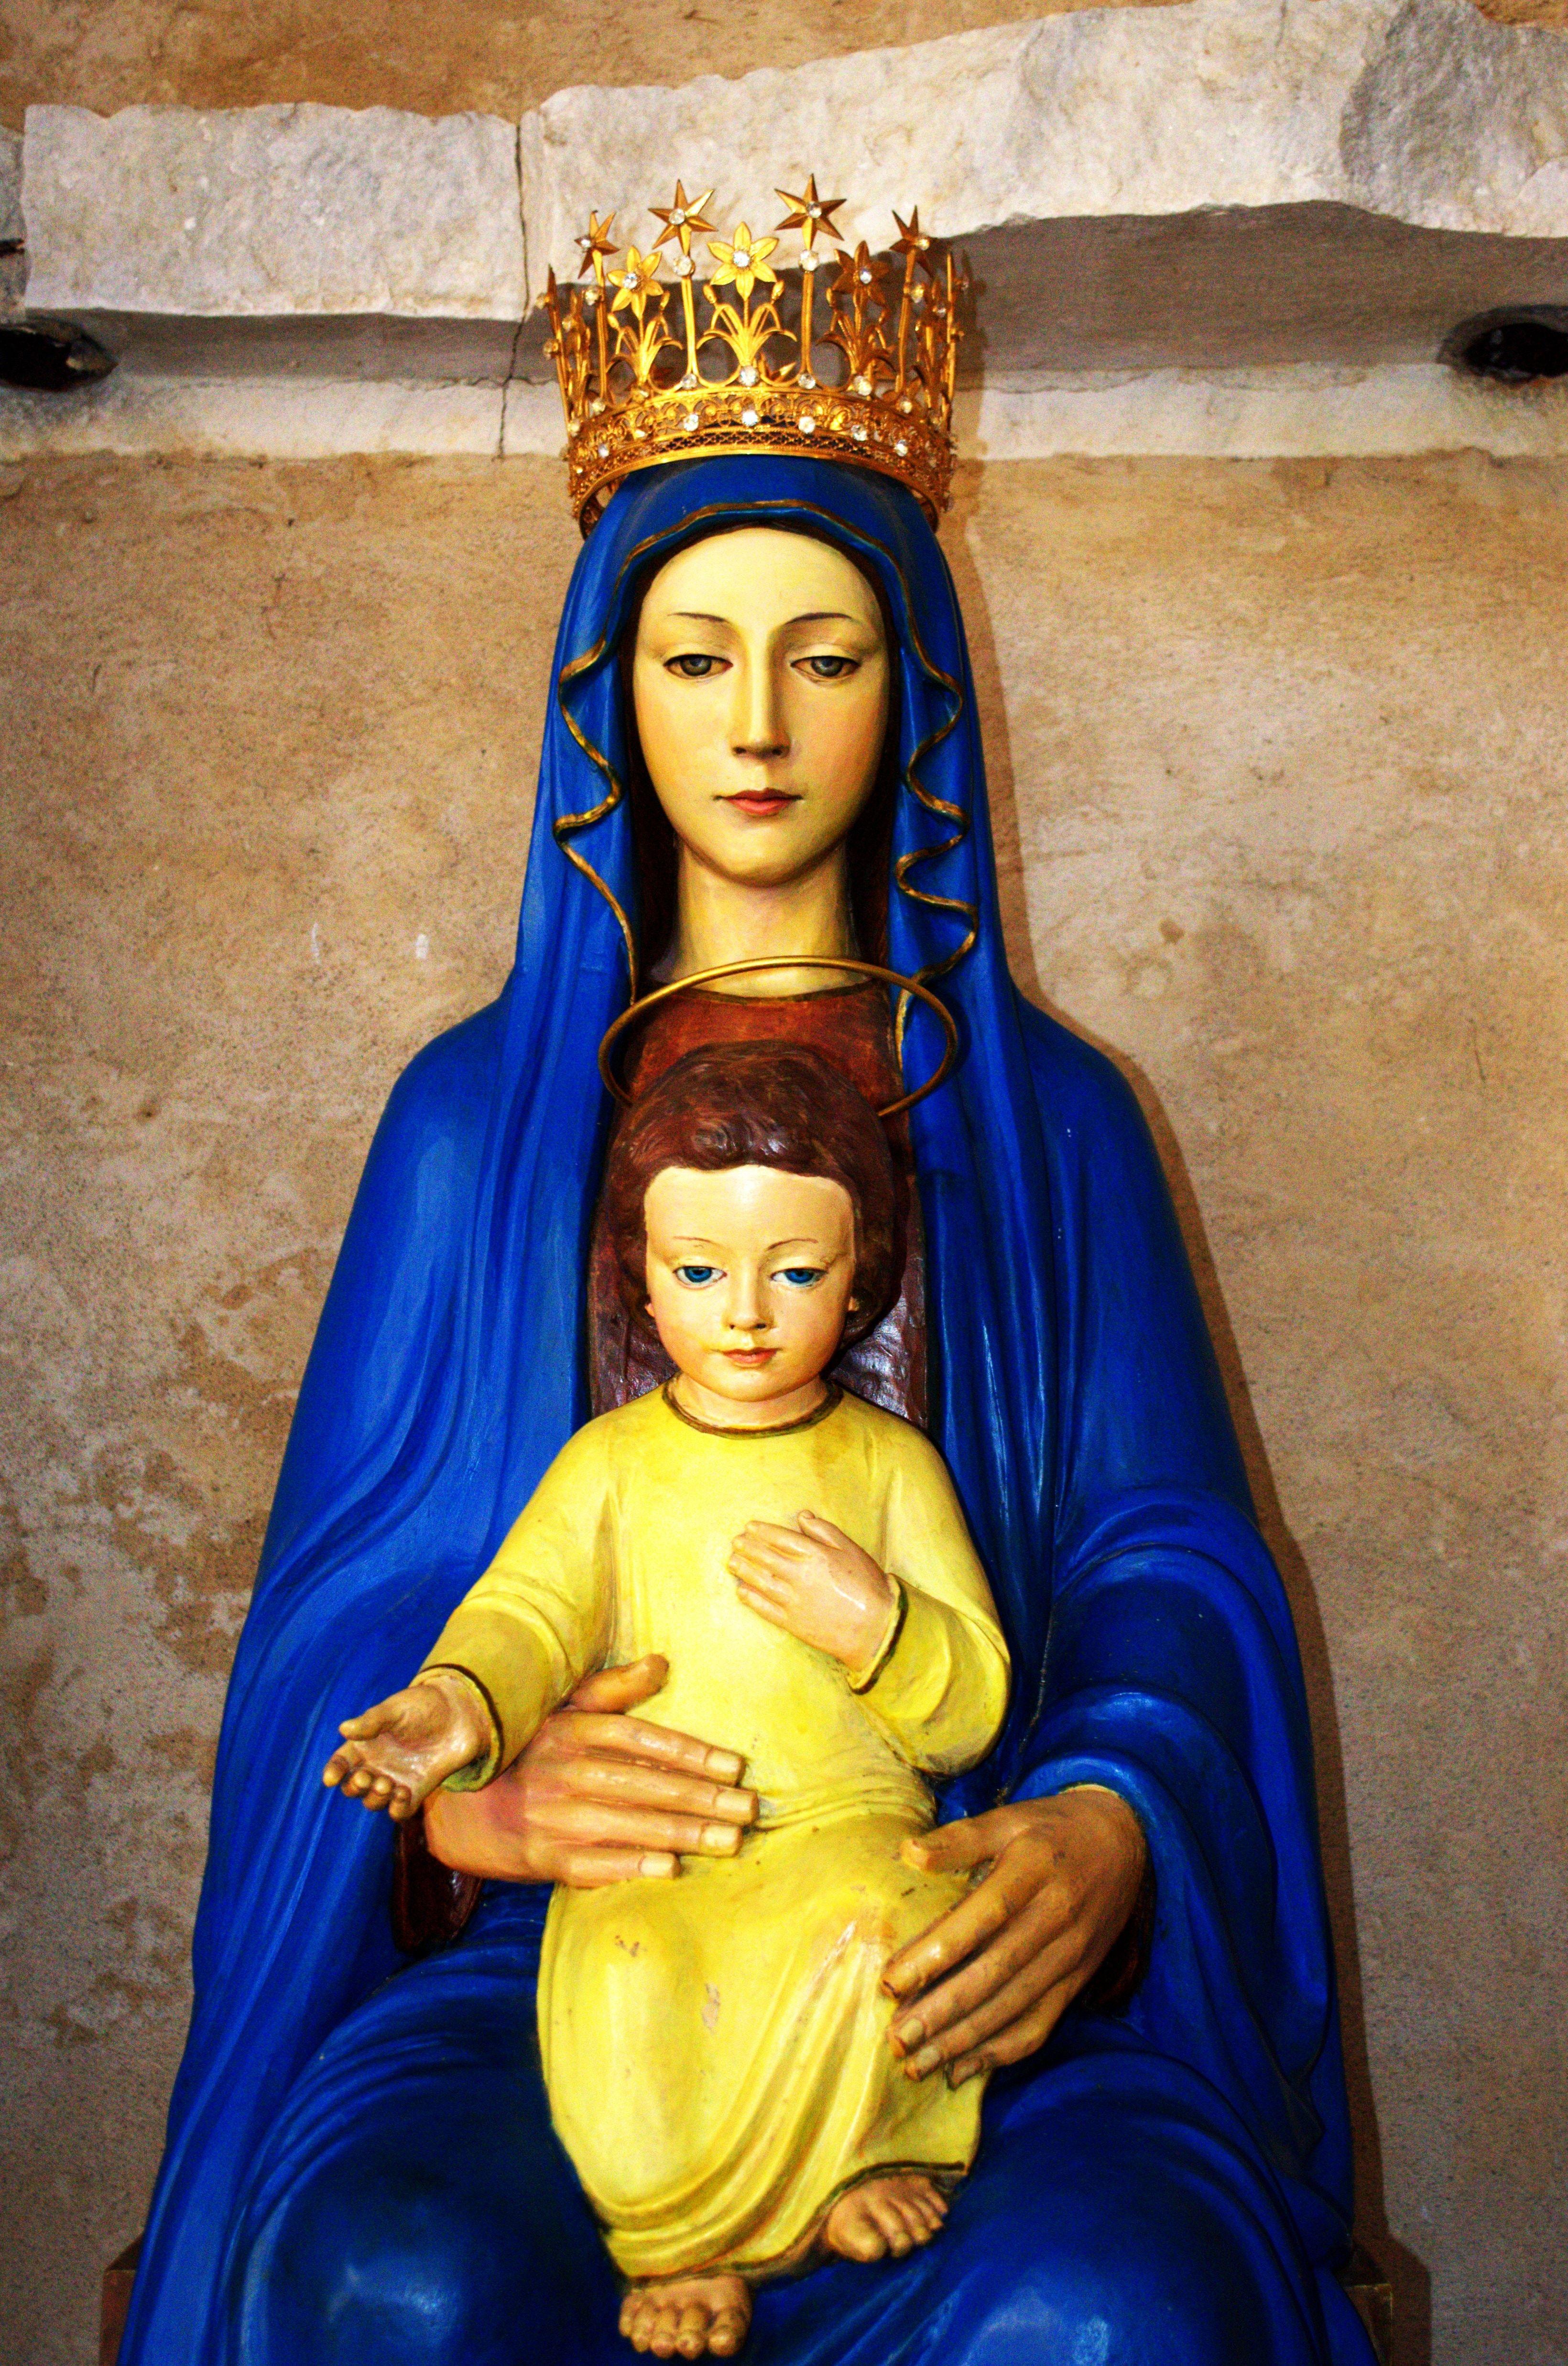 virgin mary and baby jesus figurine free image